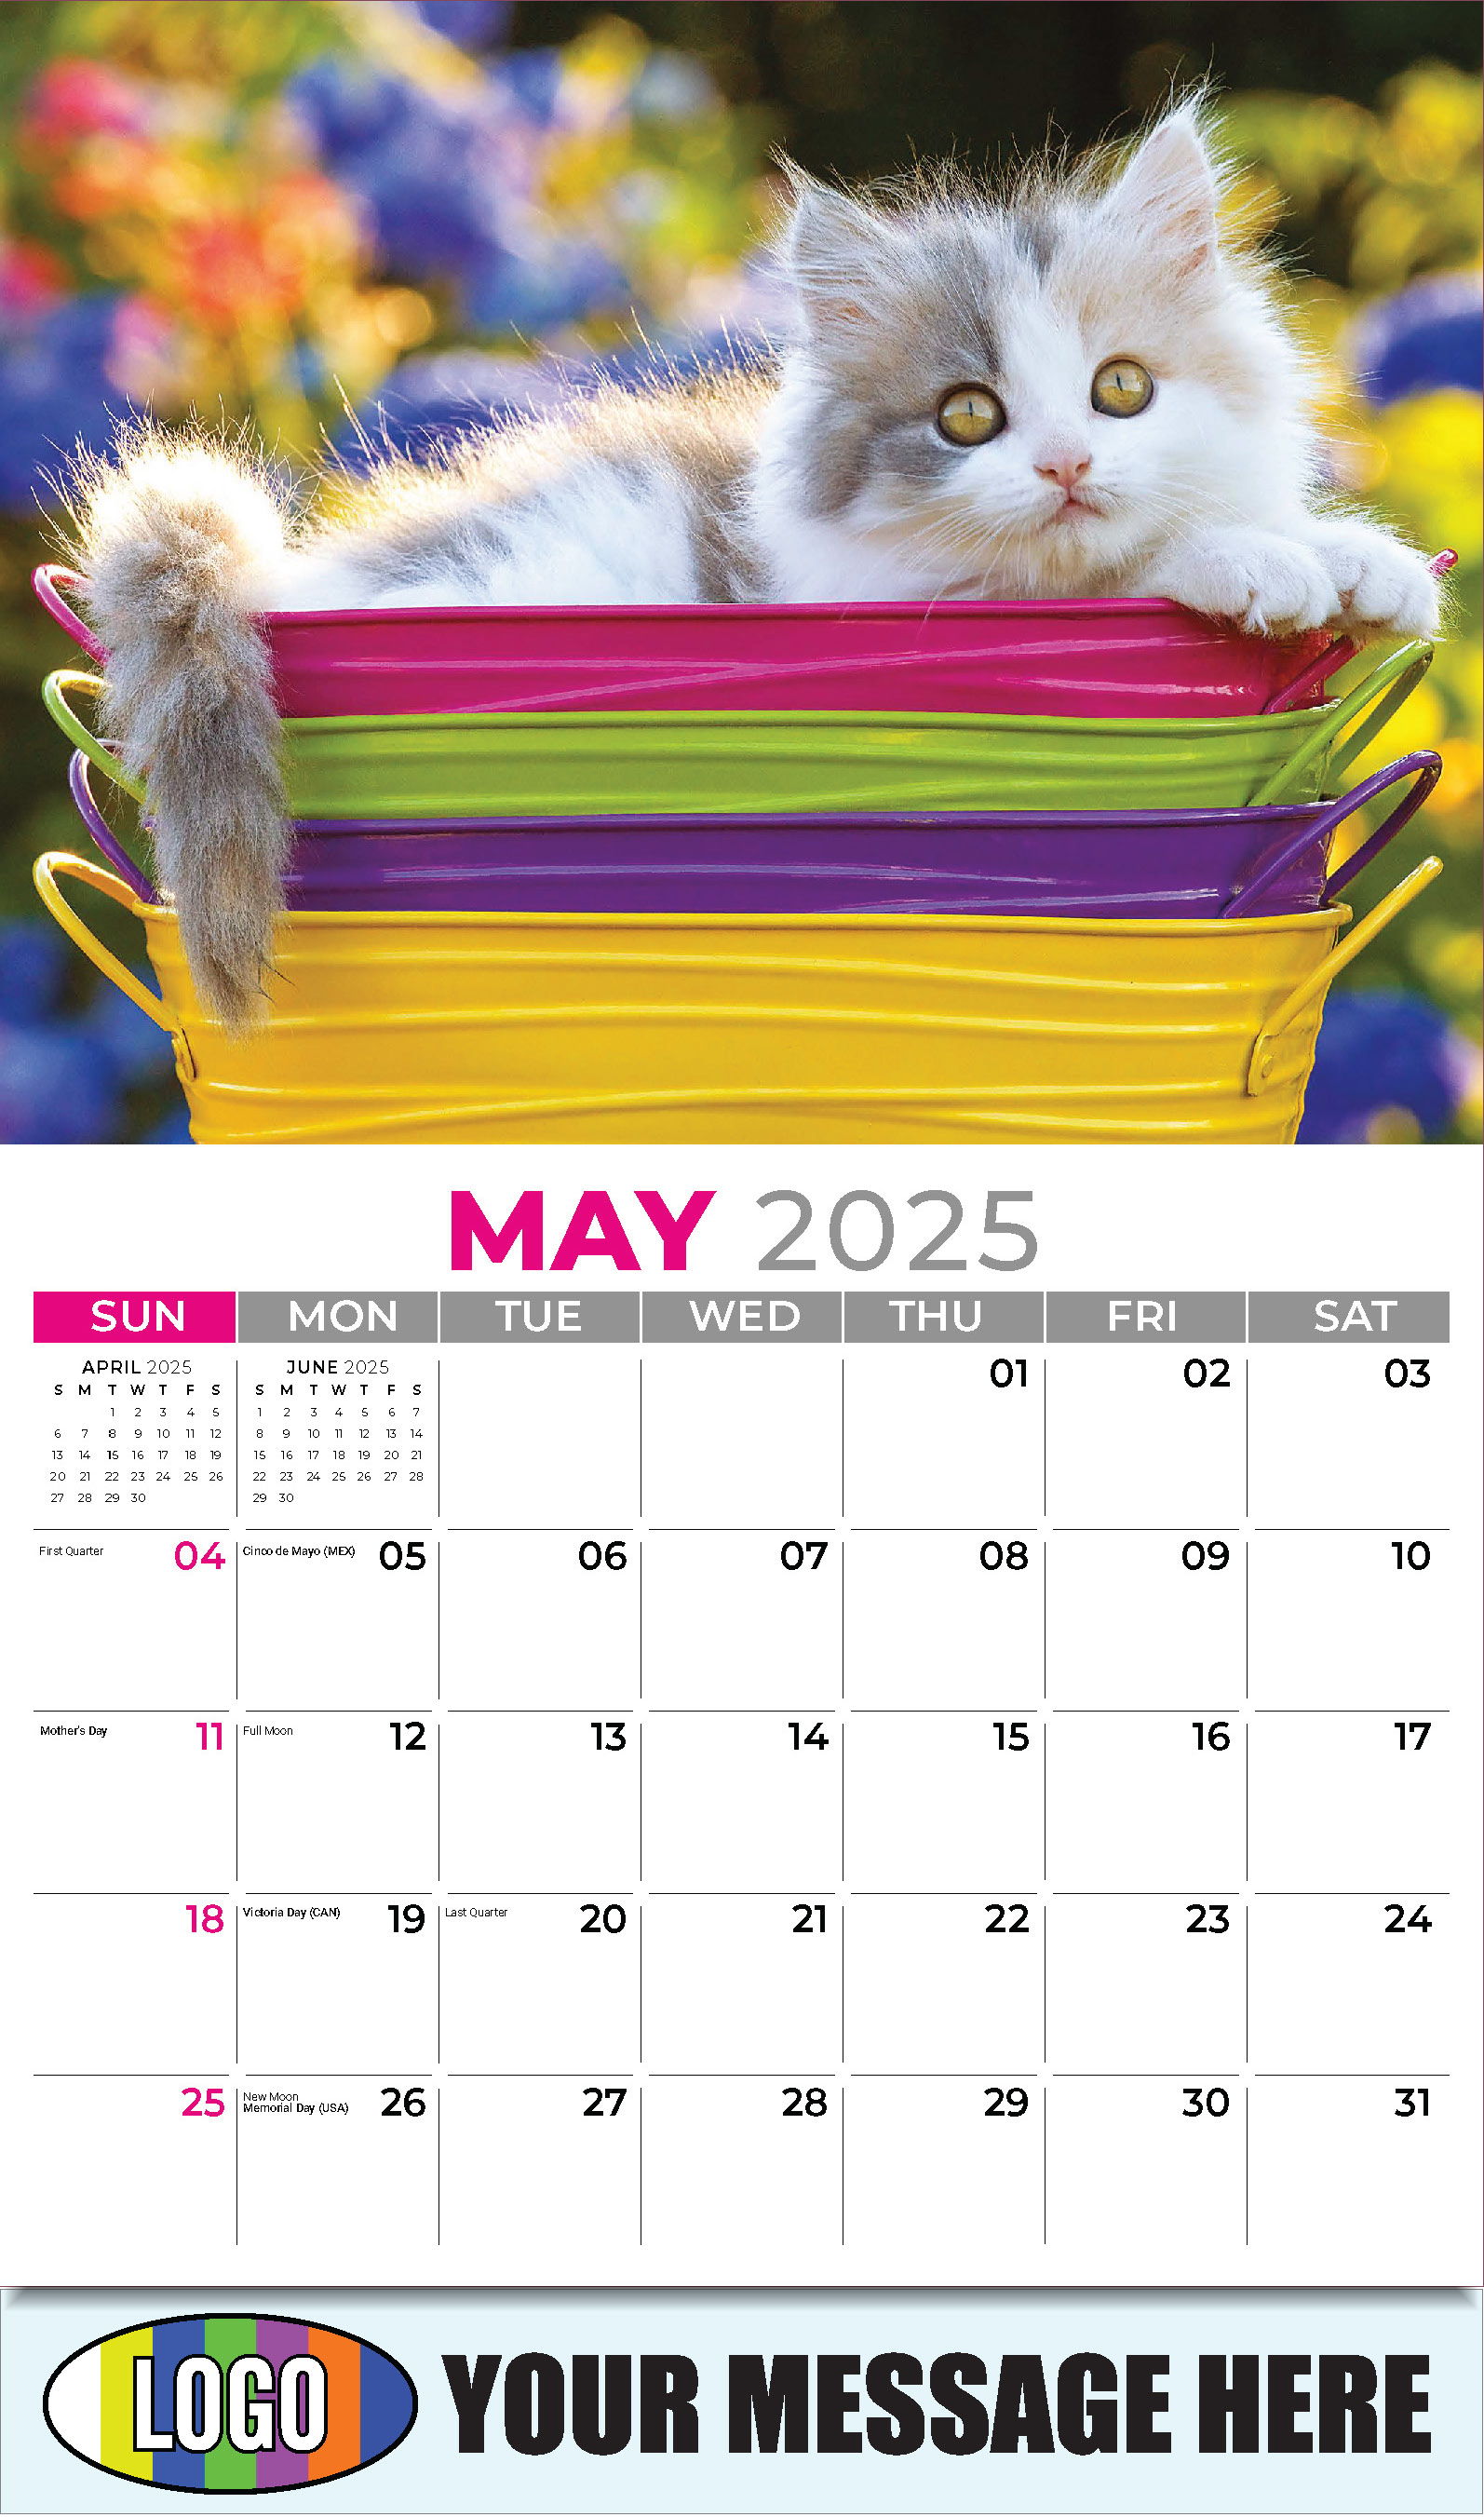 Pets 2025 Business Advertising Wall Calendar - May